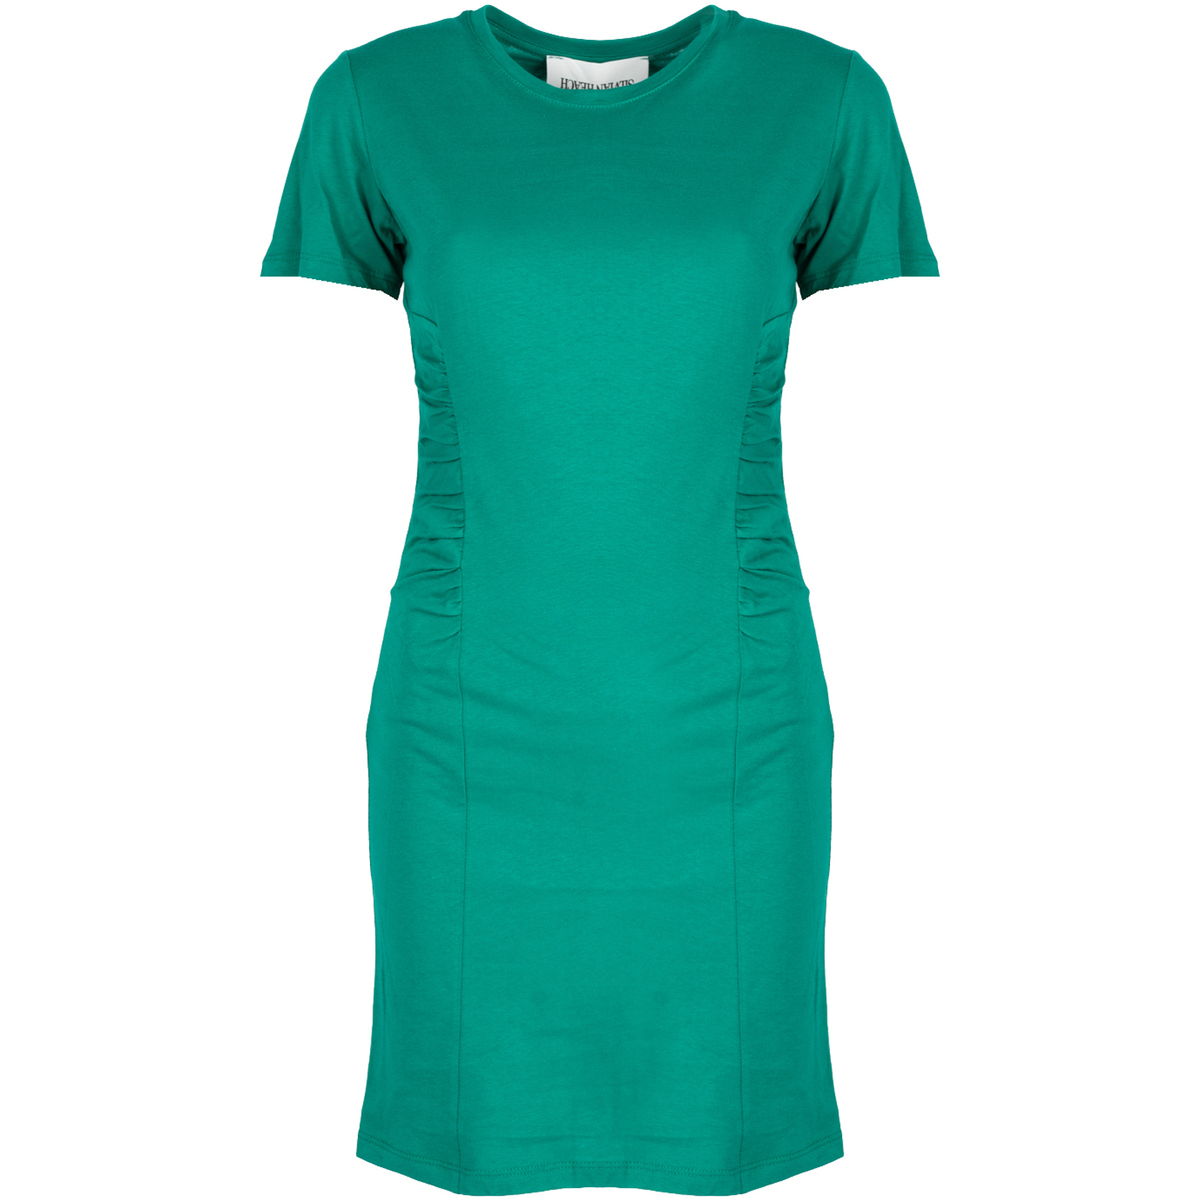 textil Mujer Vestidos cortos Silvian Heach CVP23124VE Verde